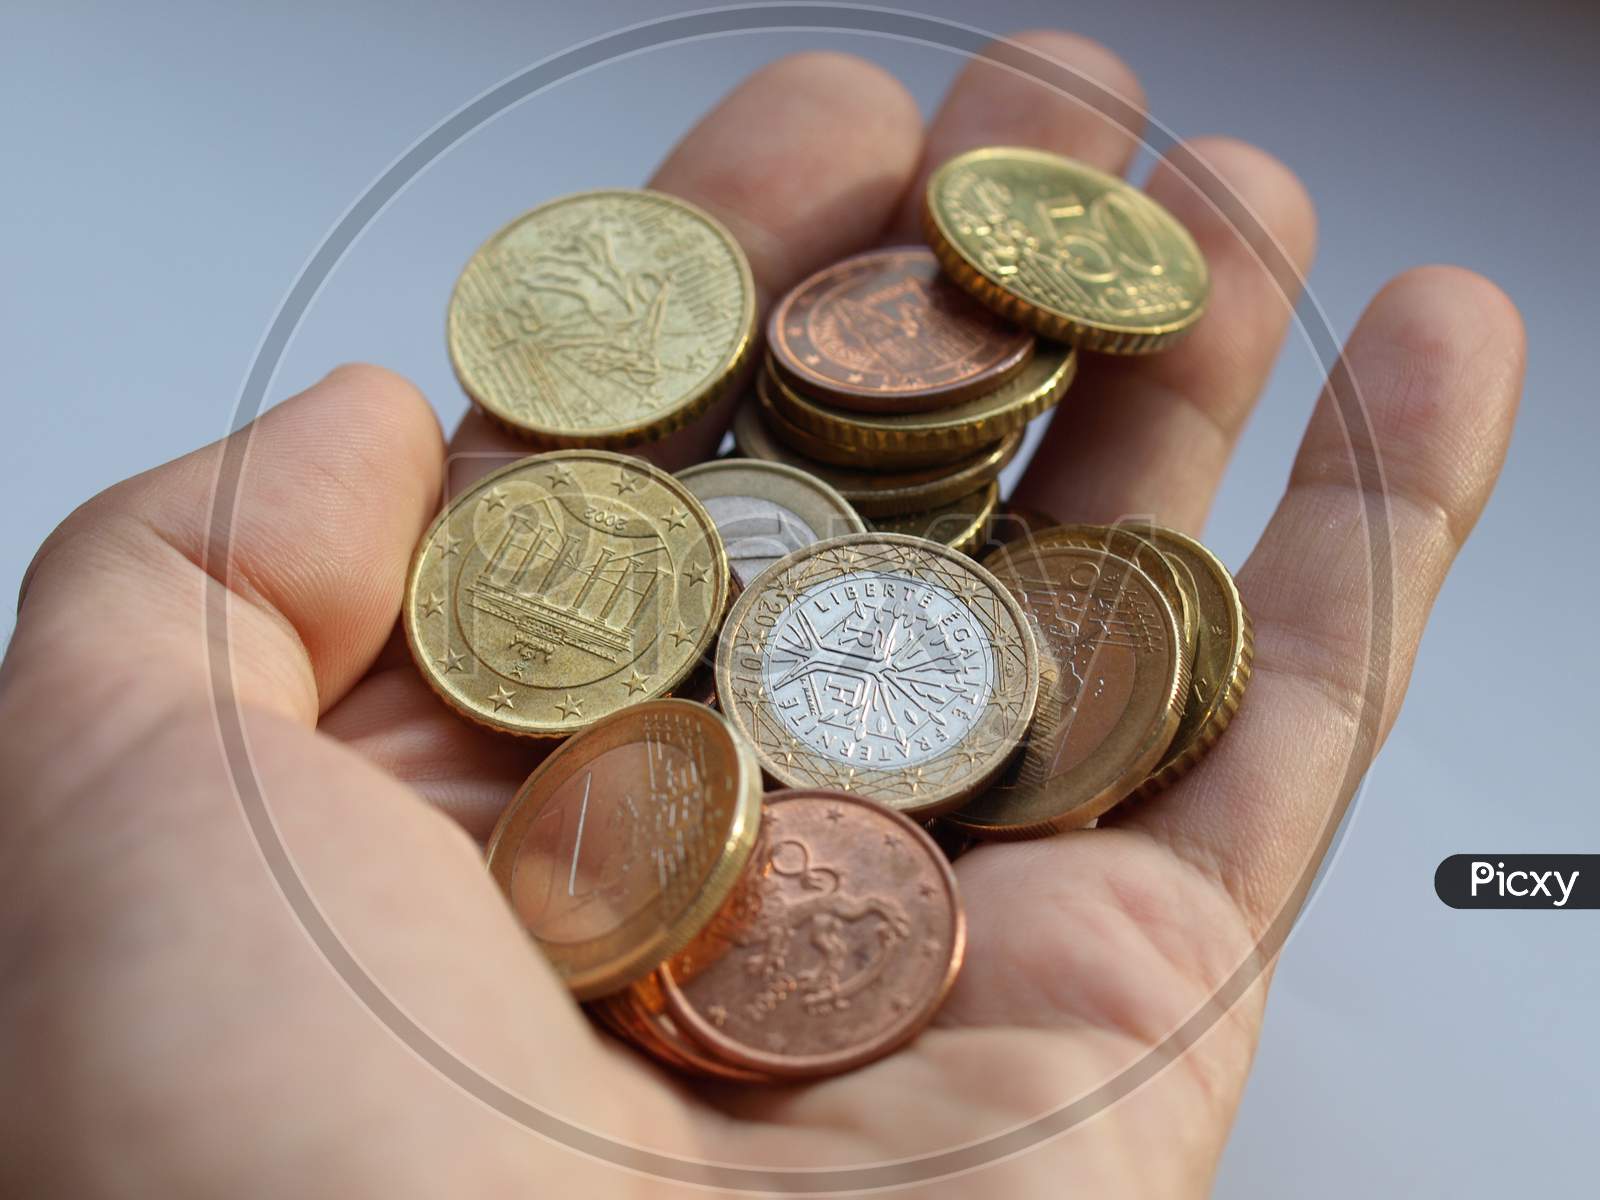 Hand With Euro Coins, European Union